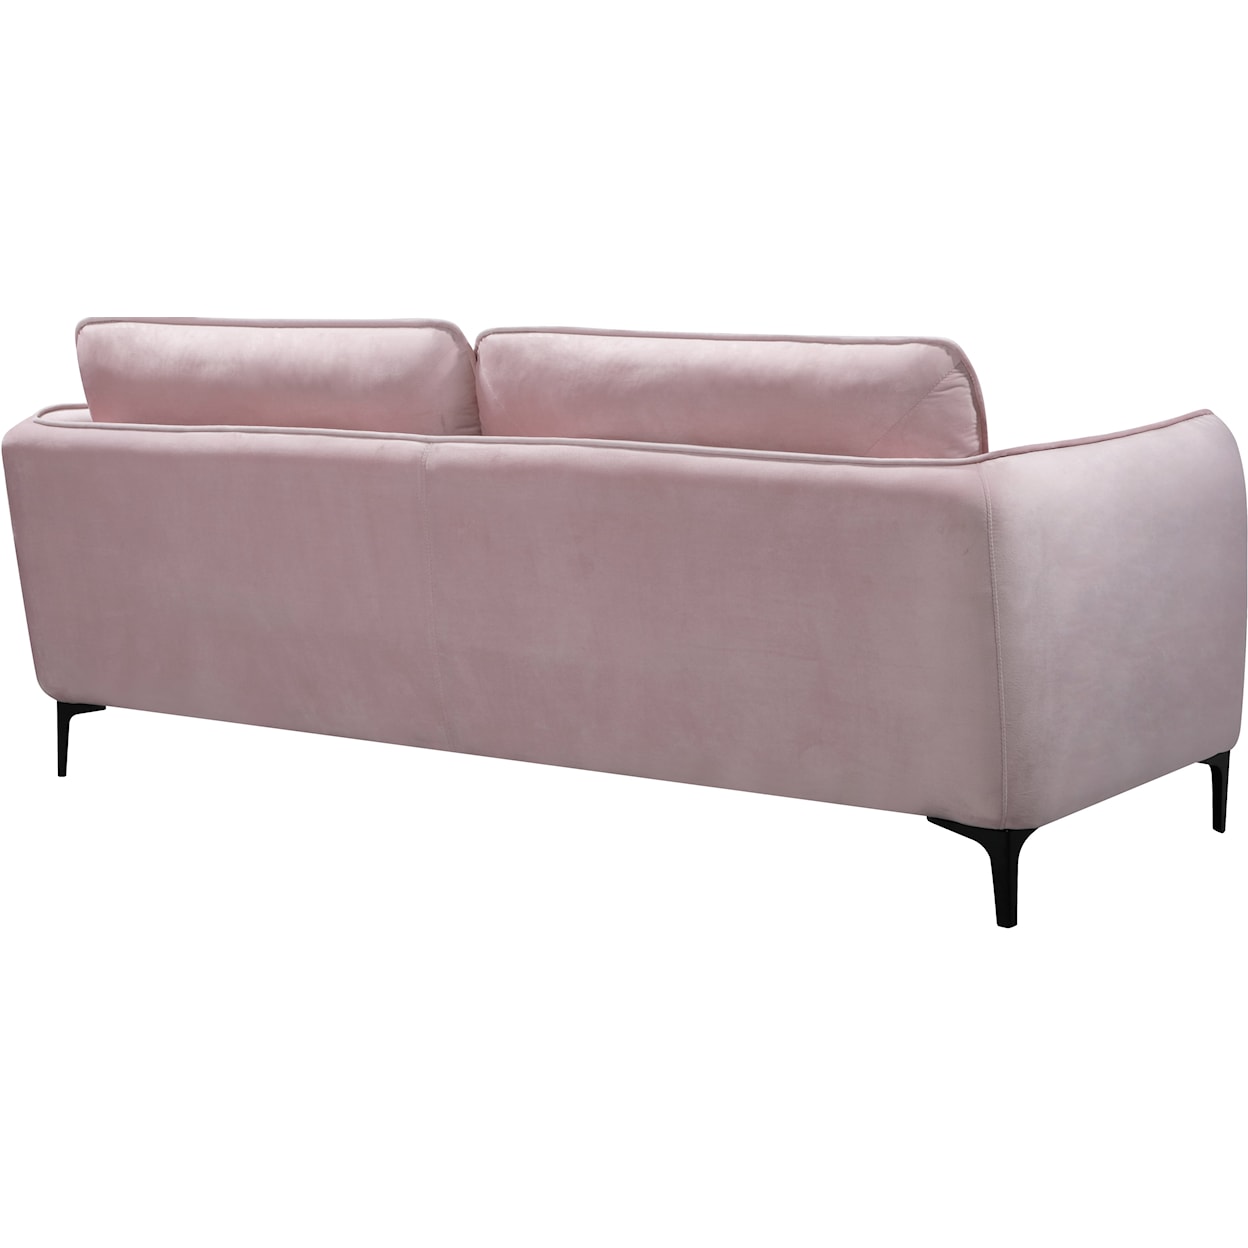 Meridian Furniture Poppy Sofa